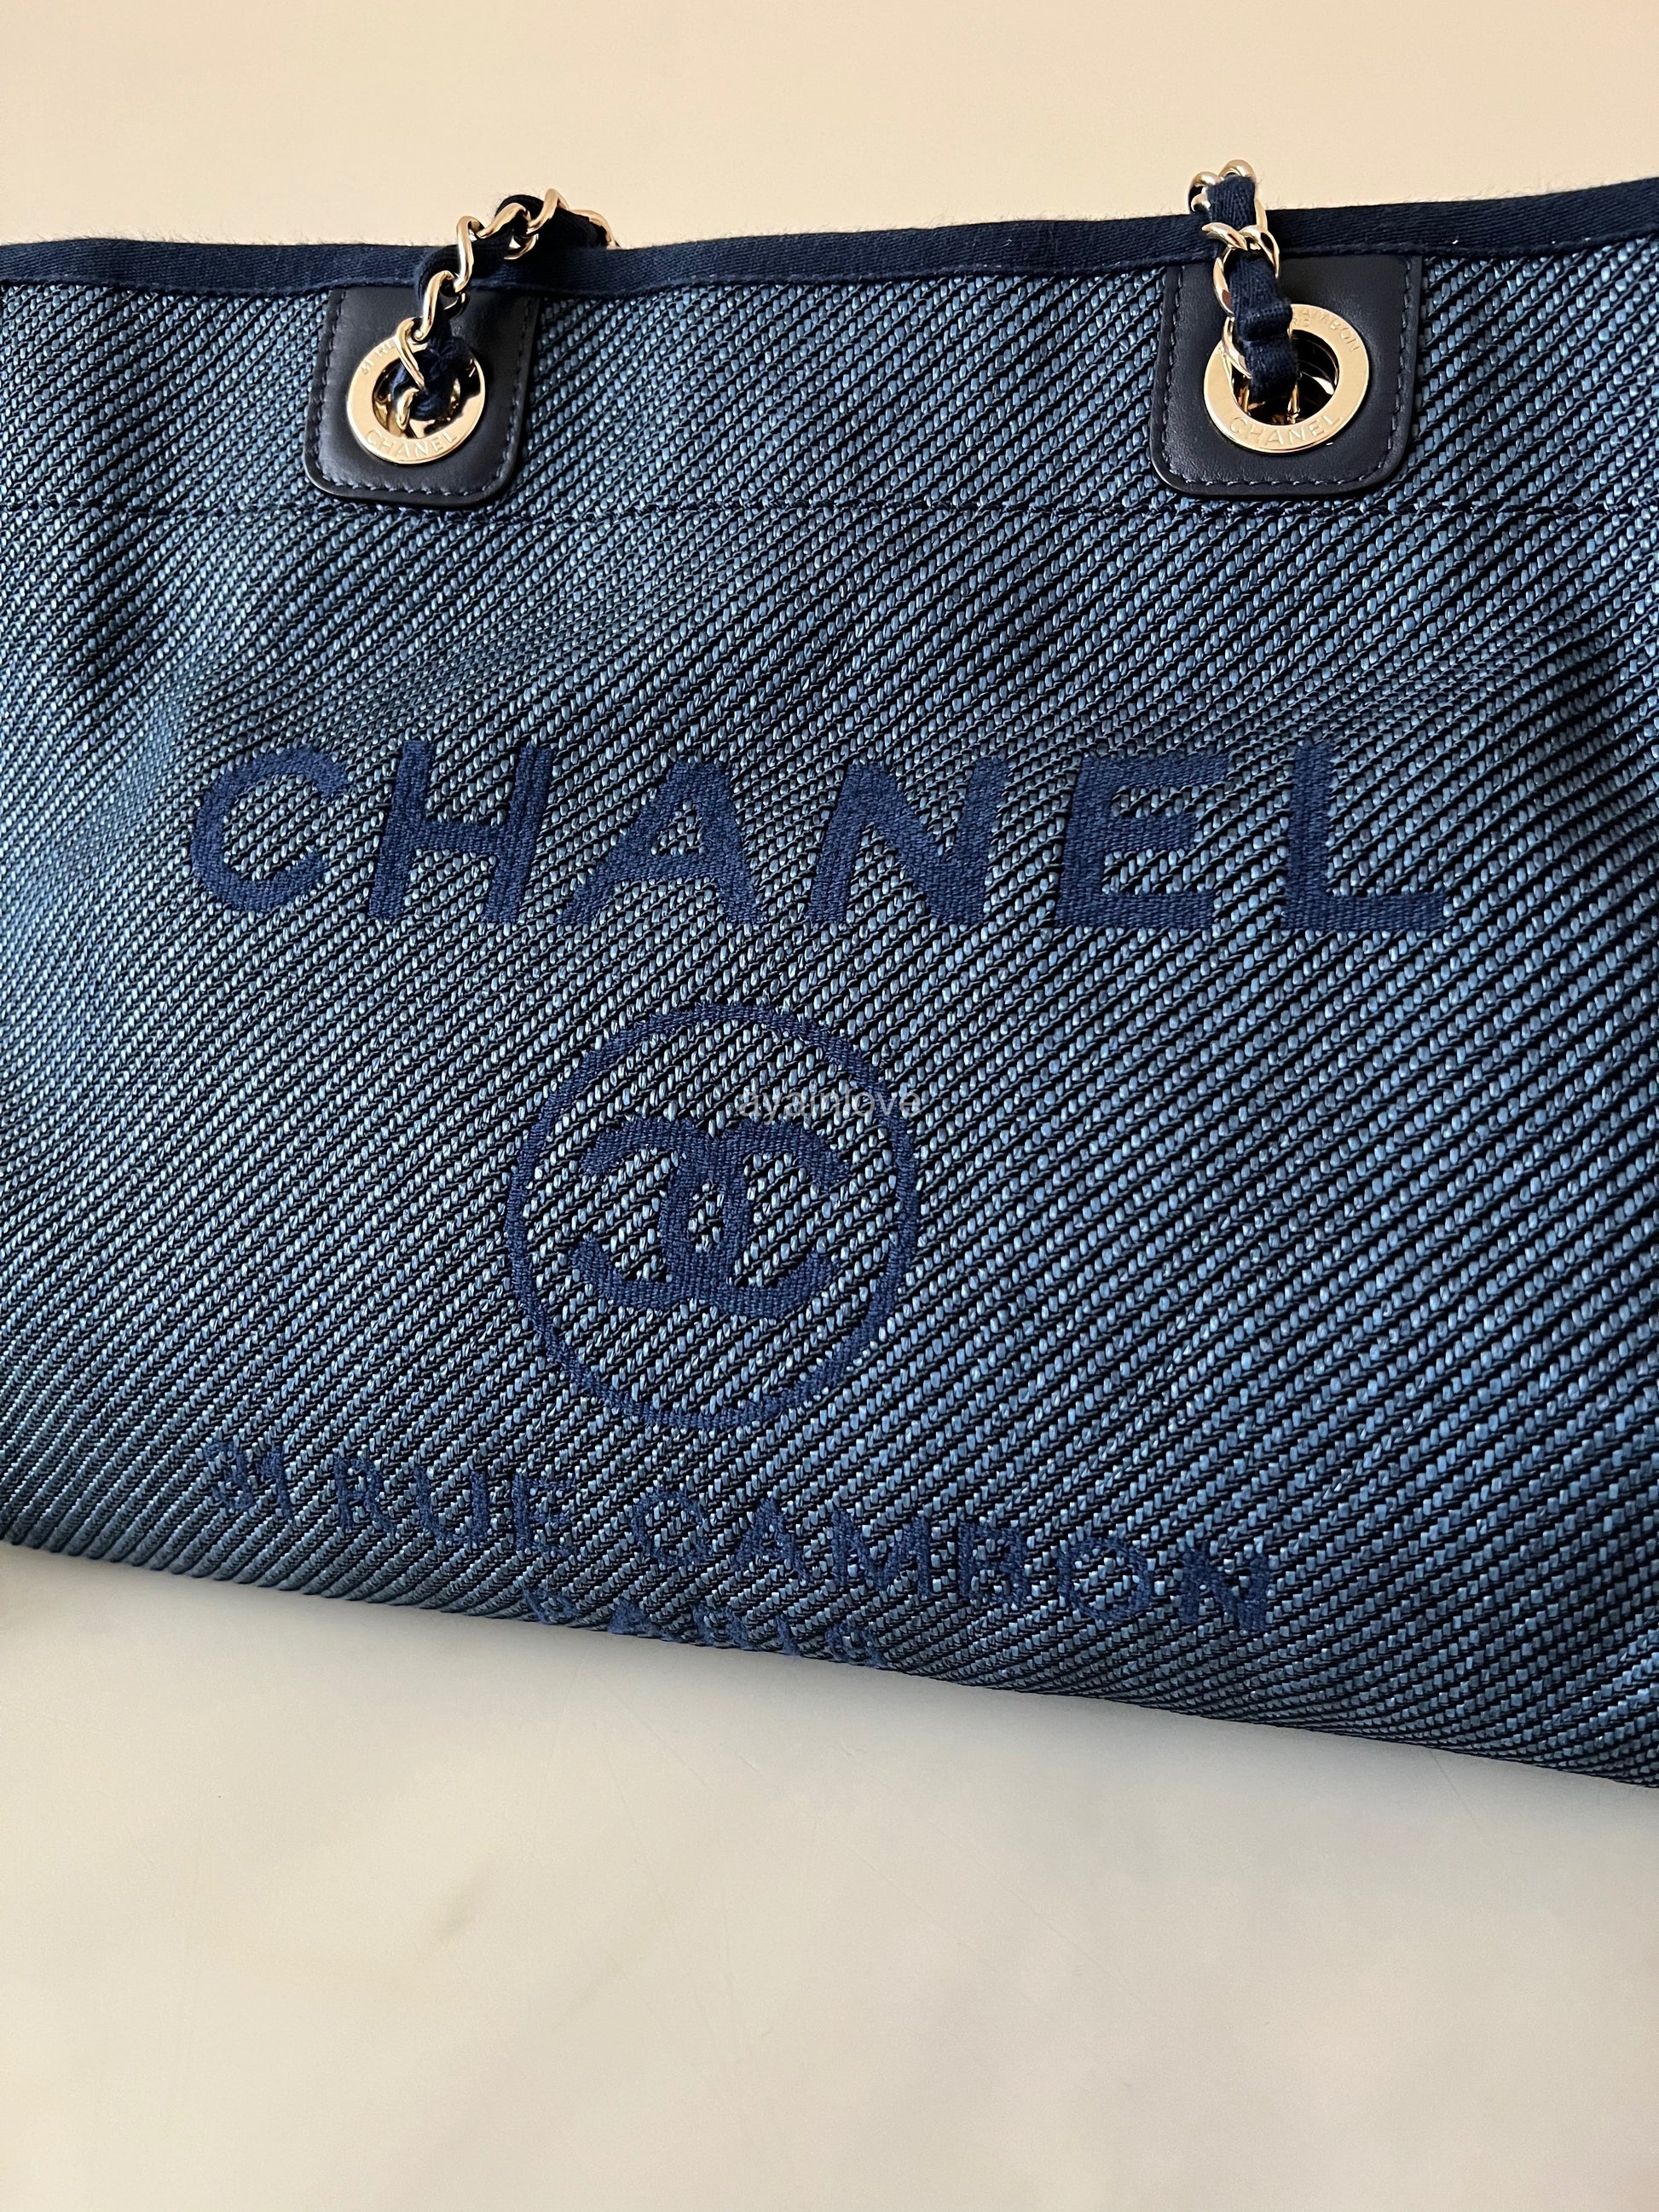 Chanel Deauville Tote Denim Medium